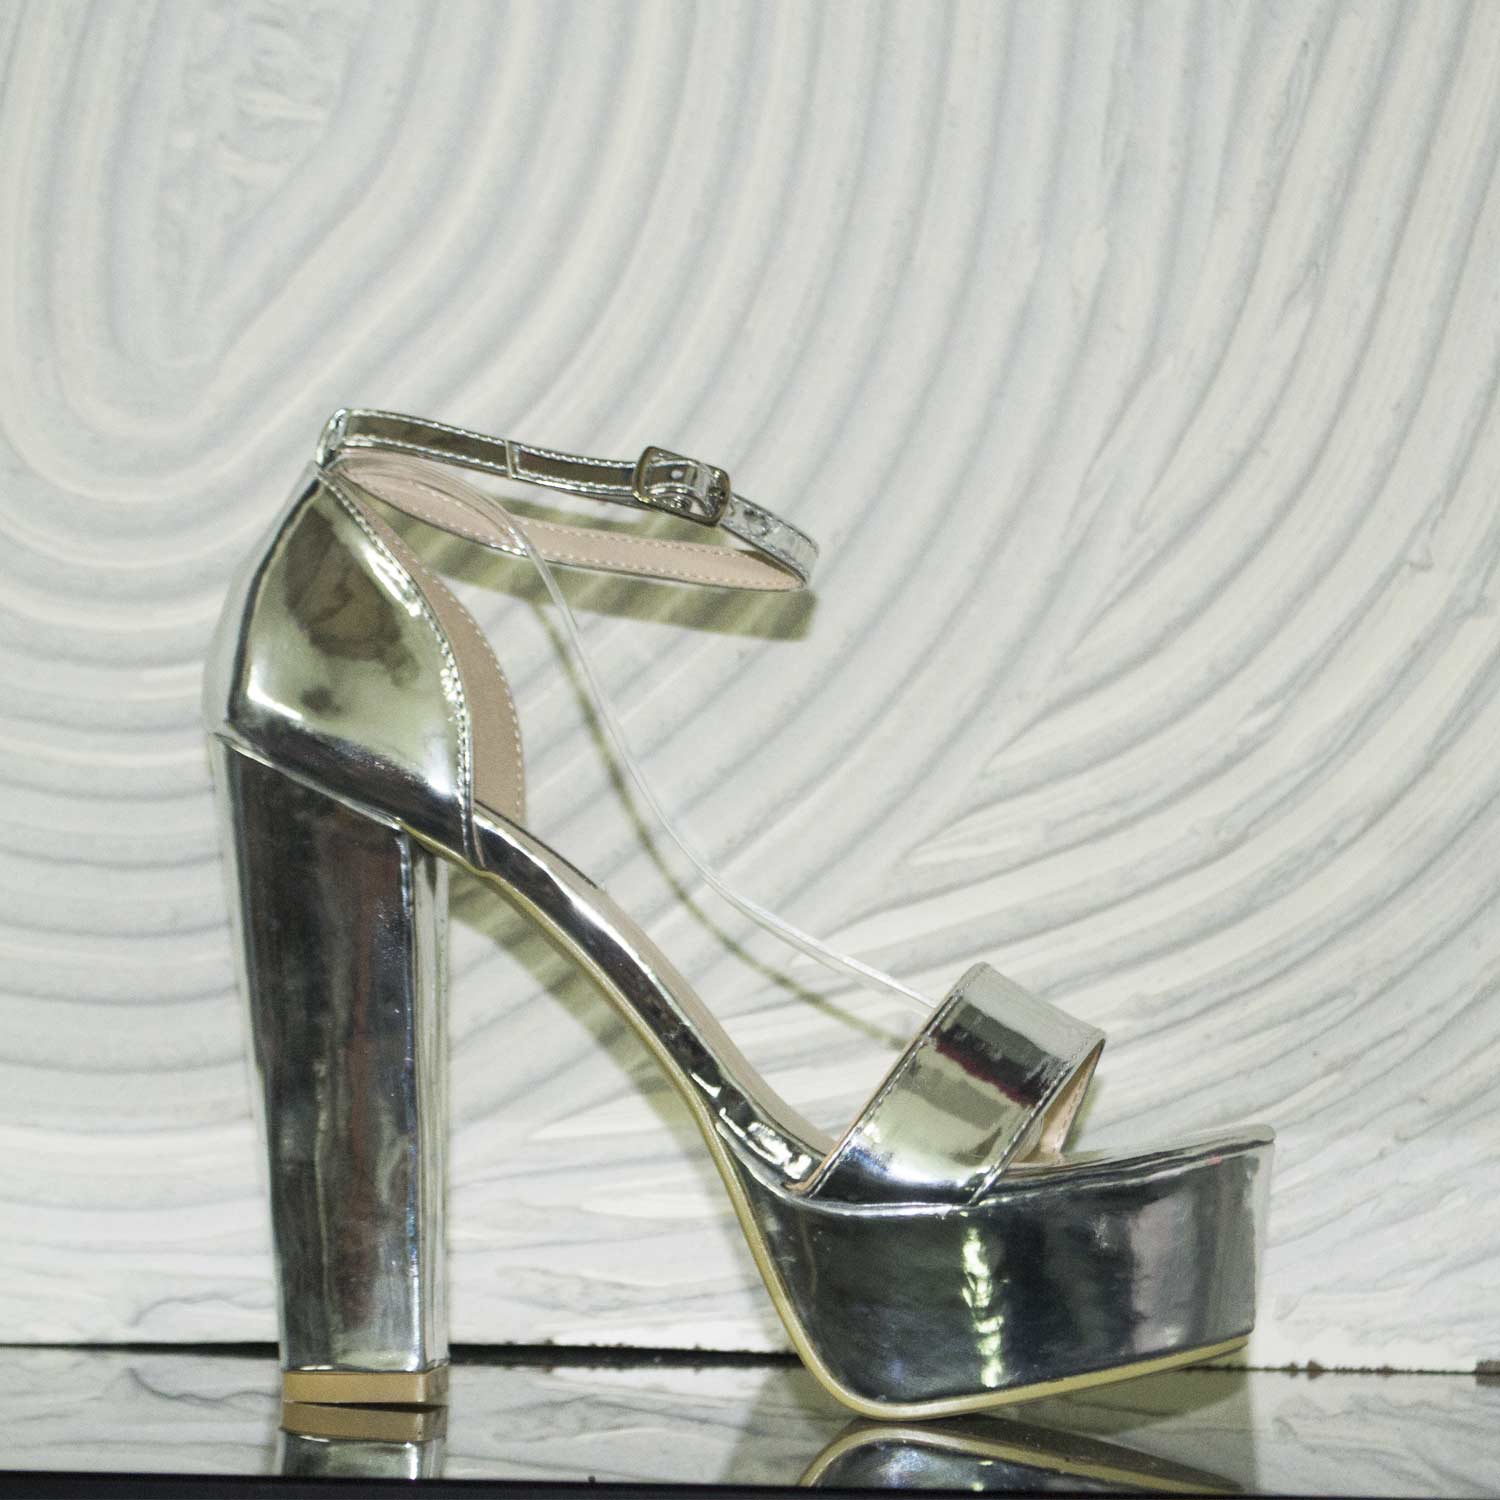 Scarpe donna alte sandalo tacco argento laminato monocromo chic glamour ...